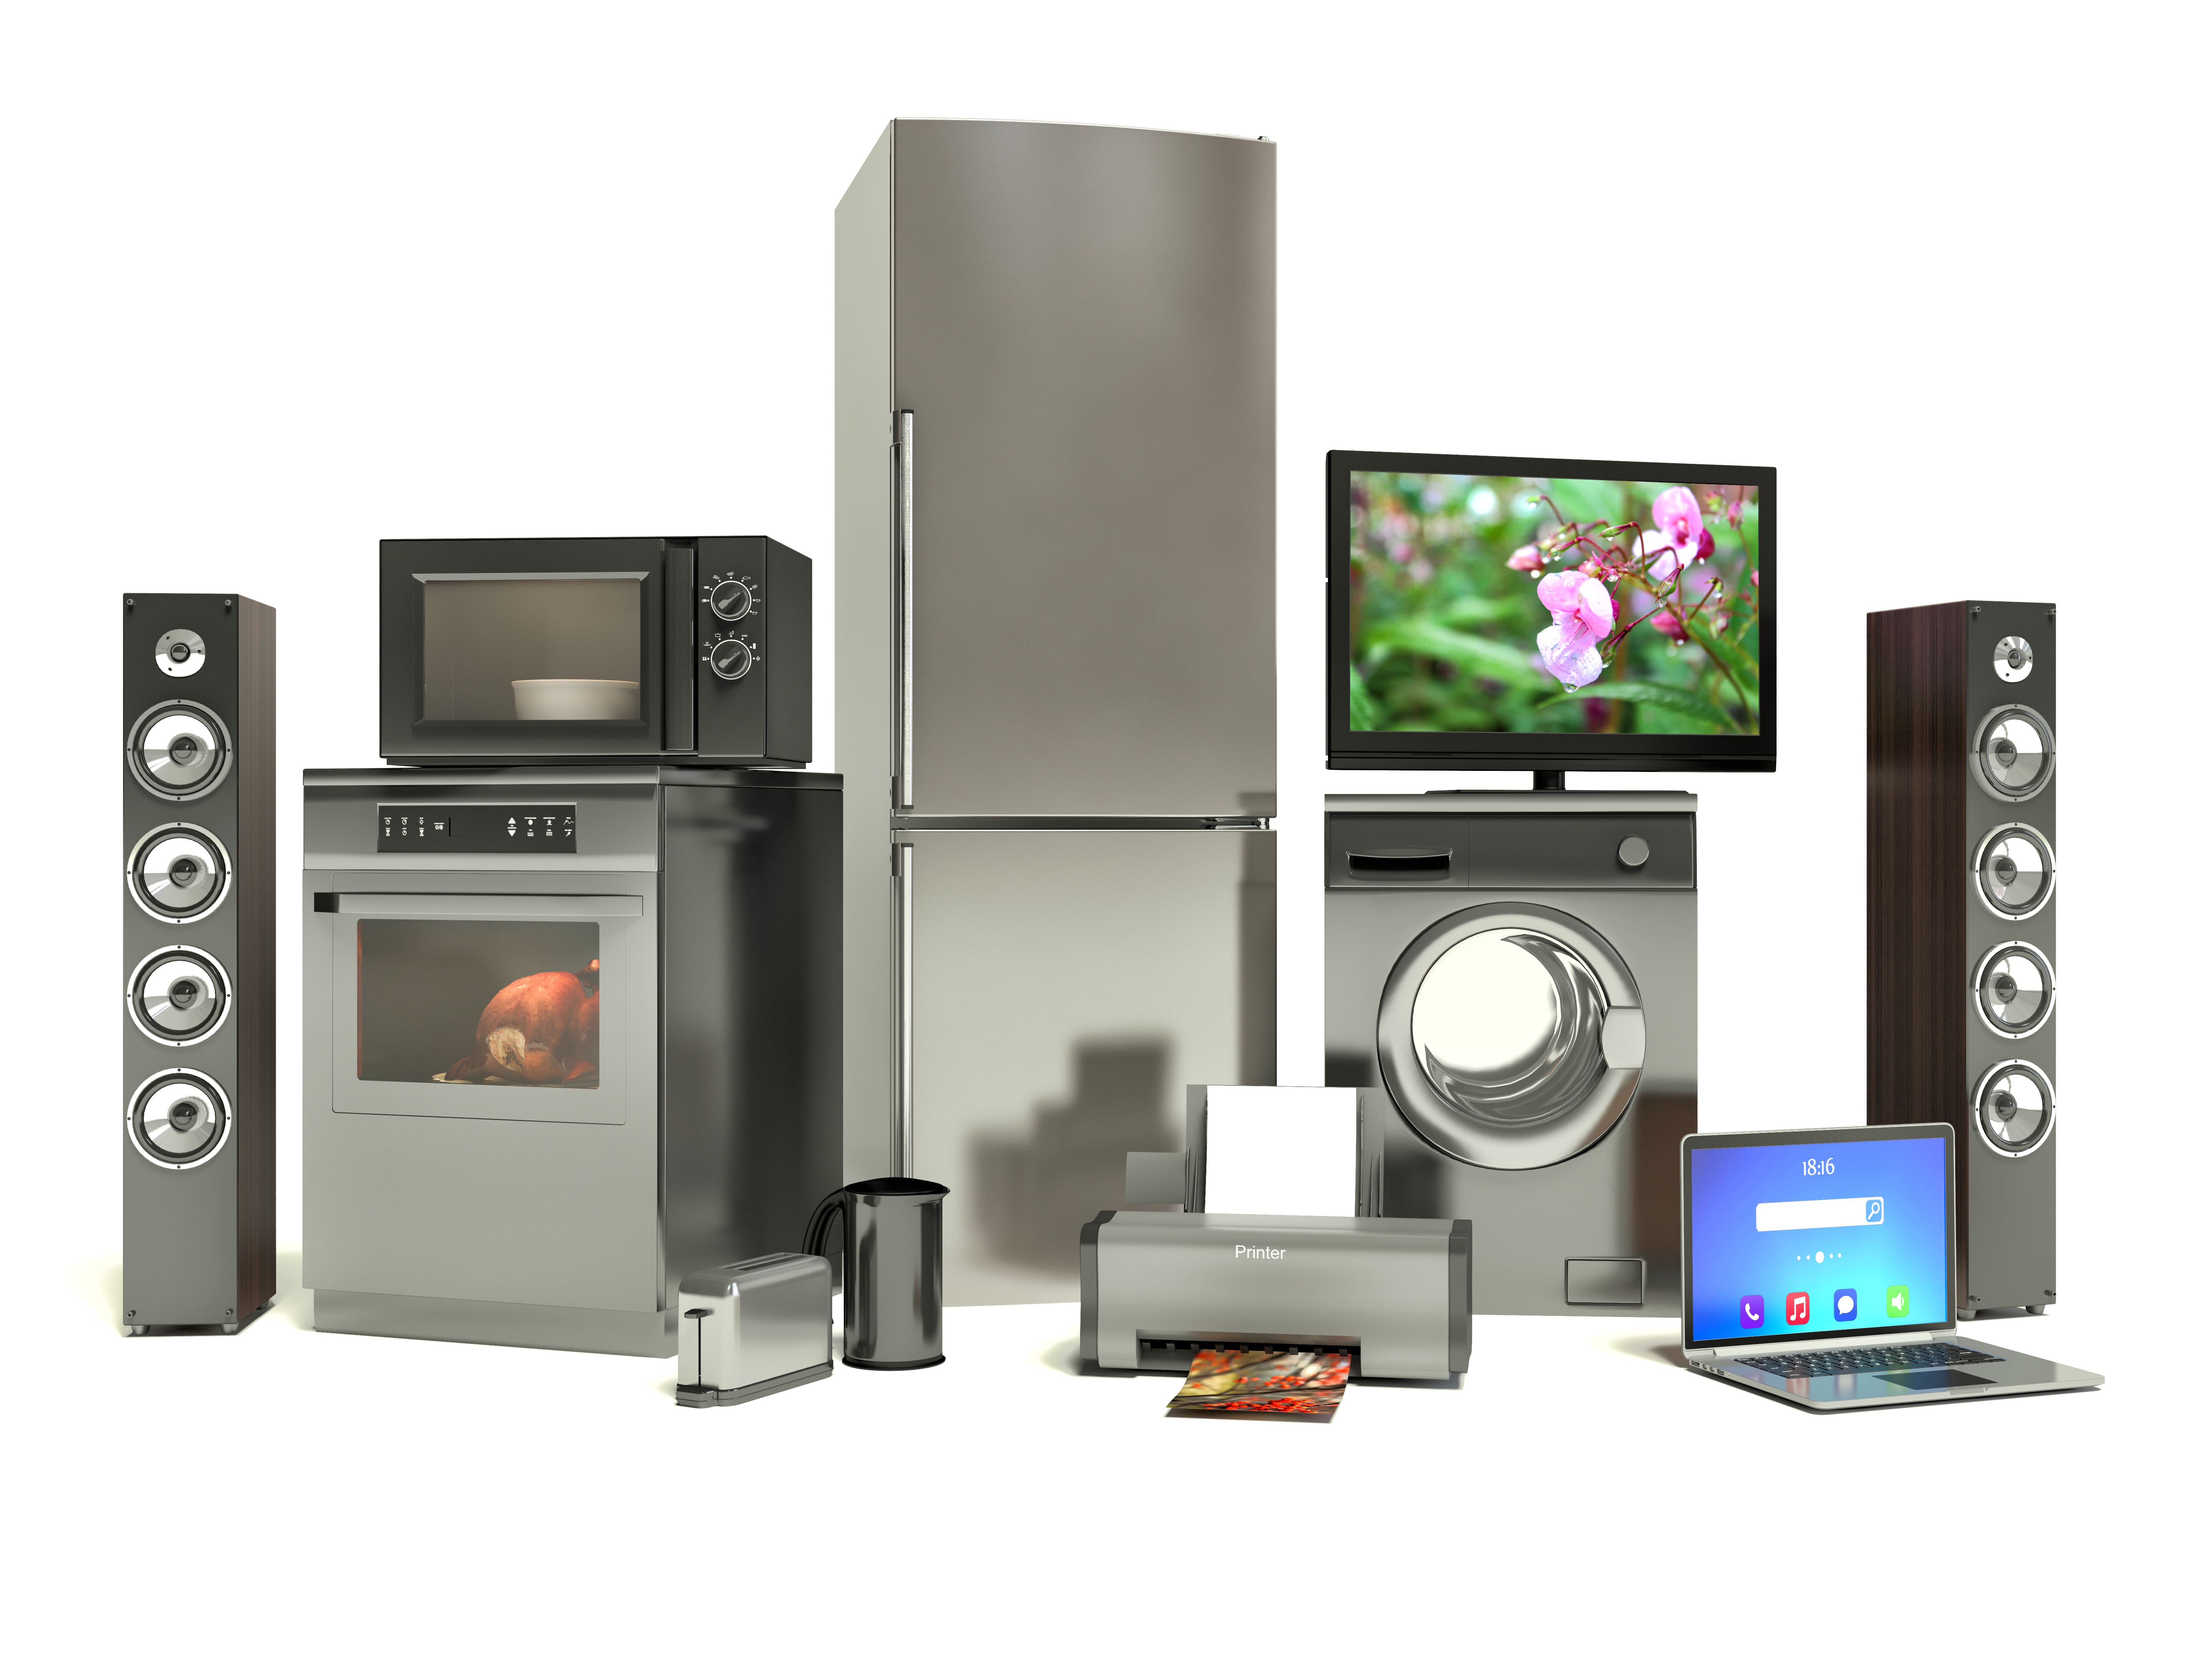 Home Appliances Gas Cooker Tv Cinema Refrigerator Air Conditioner Microwave Laptop Washing Machine 1